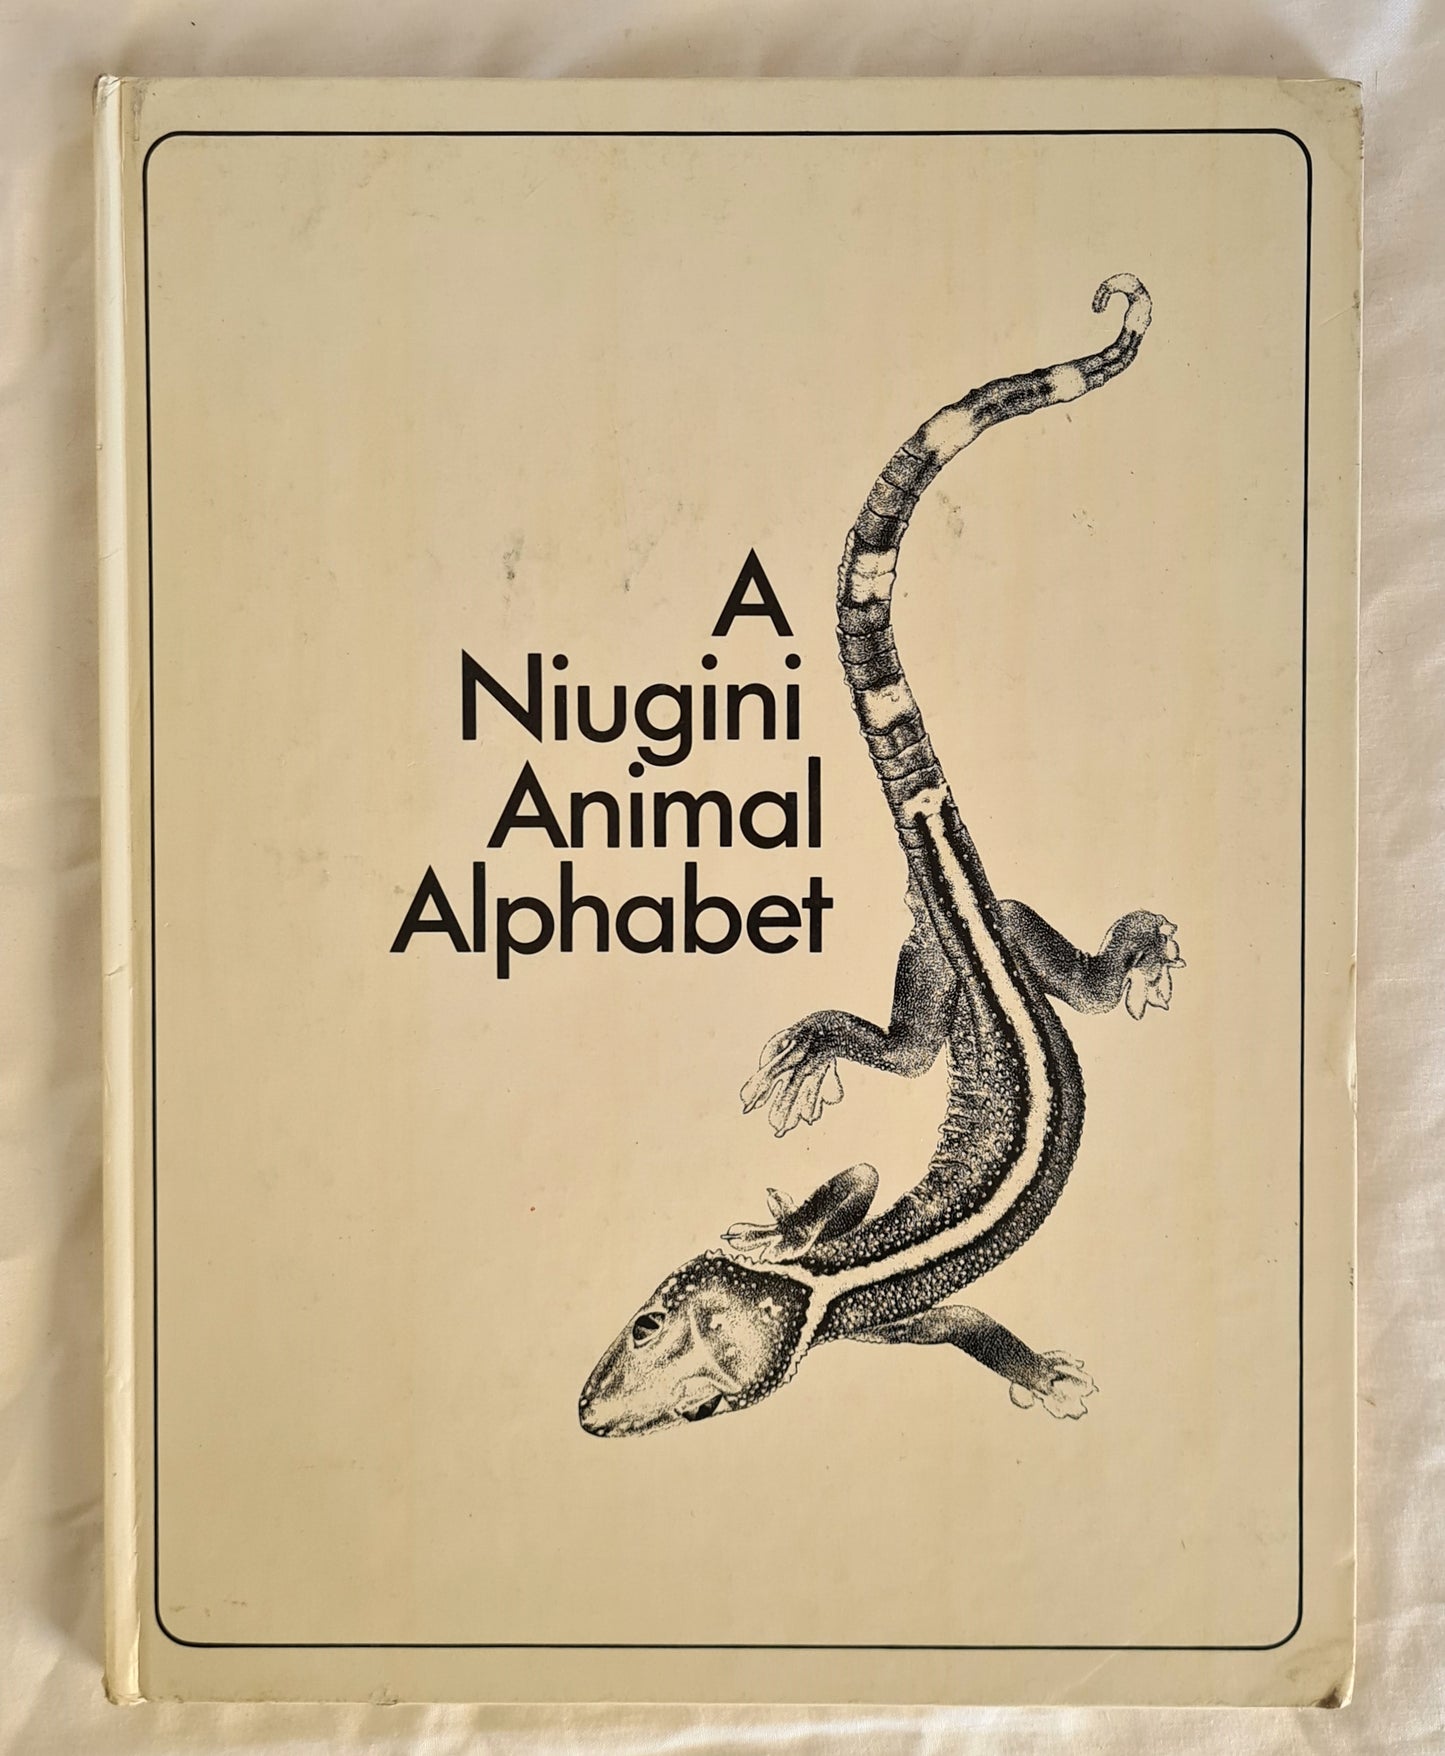 A Niugini Animal Alphabet  by Eric Lindgren  Illustrations by Vali Herzer